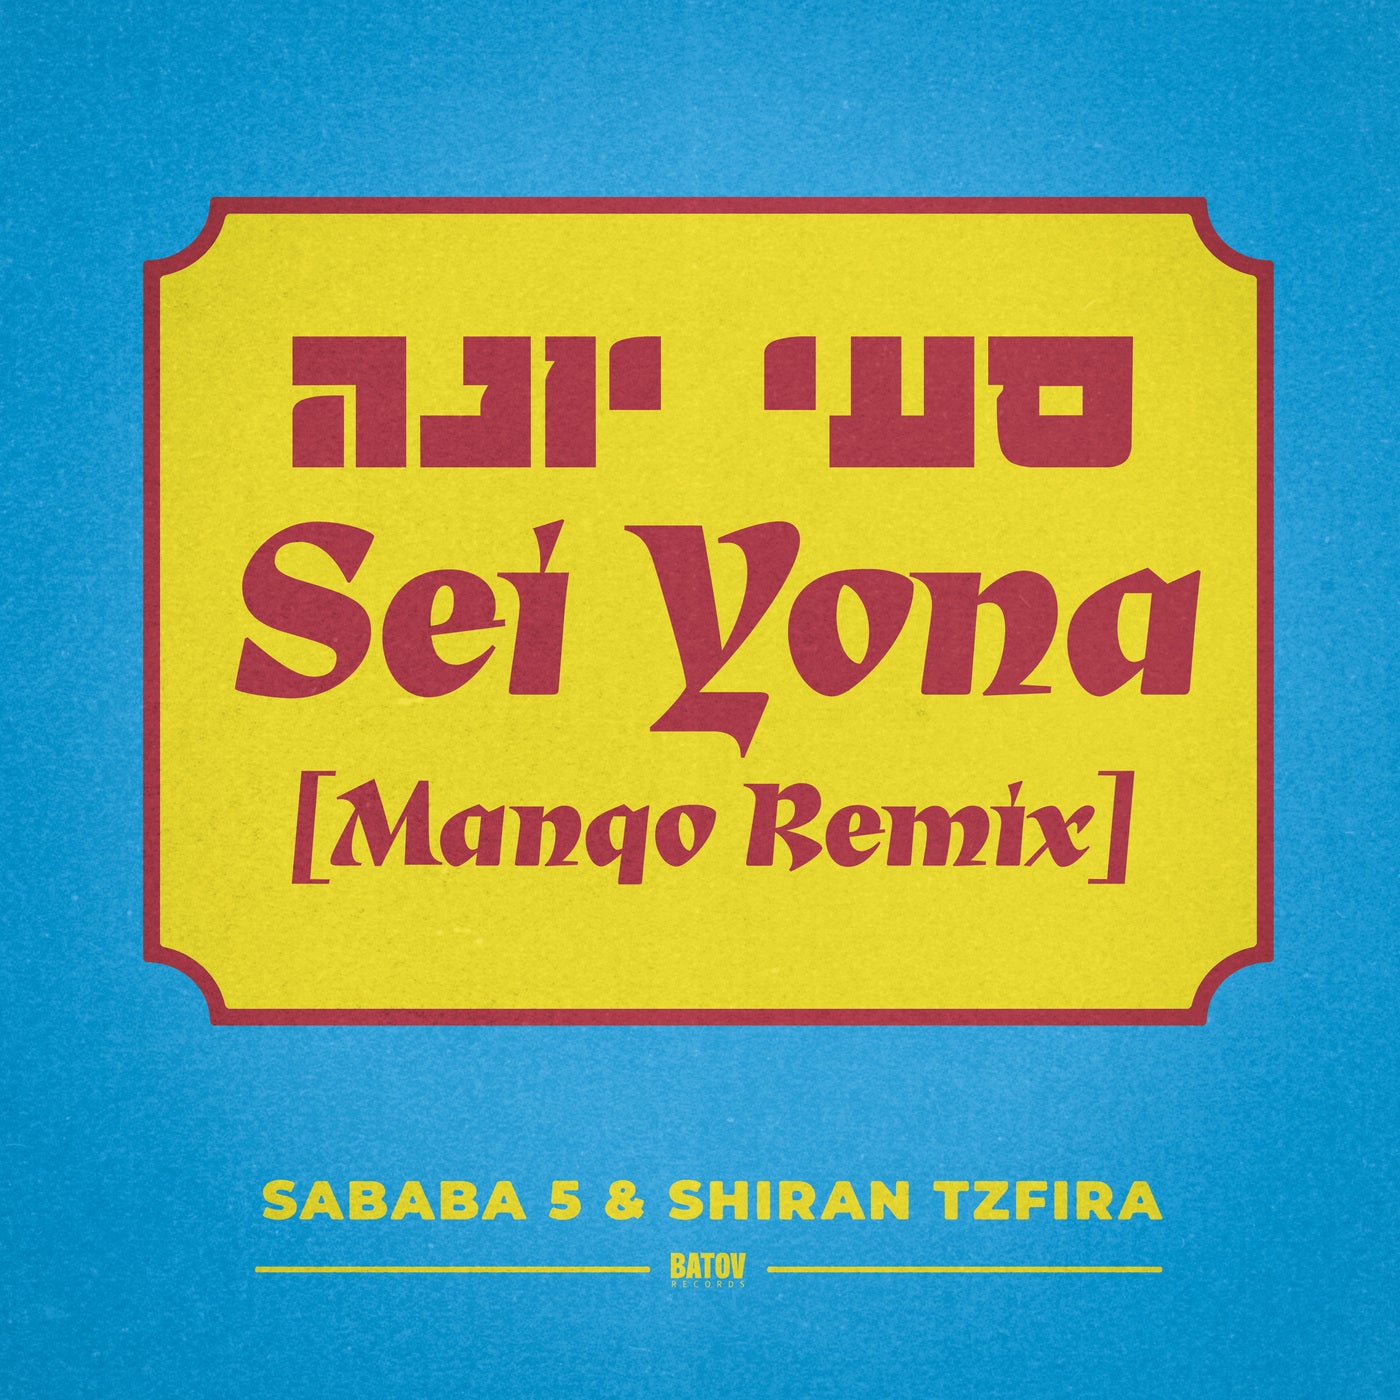 Sei Yona (Manqo Remix)